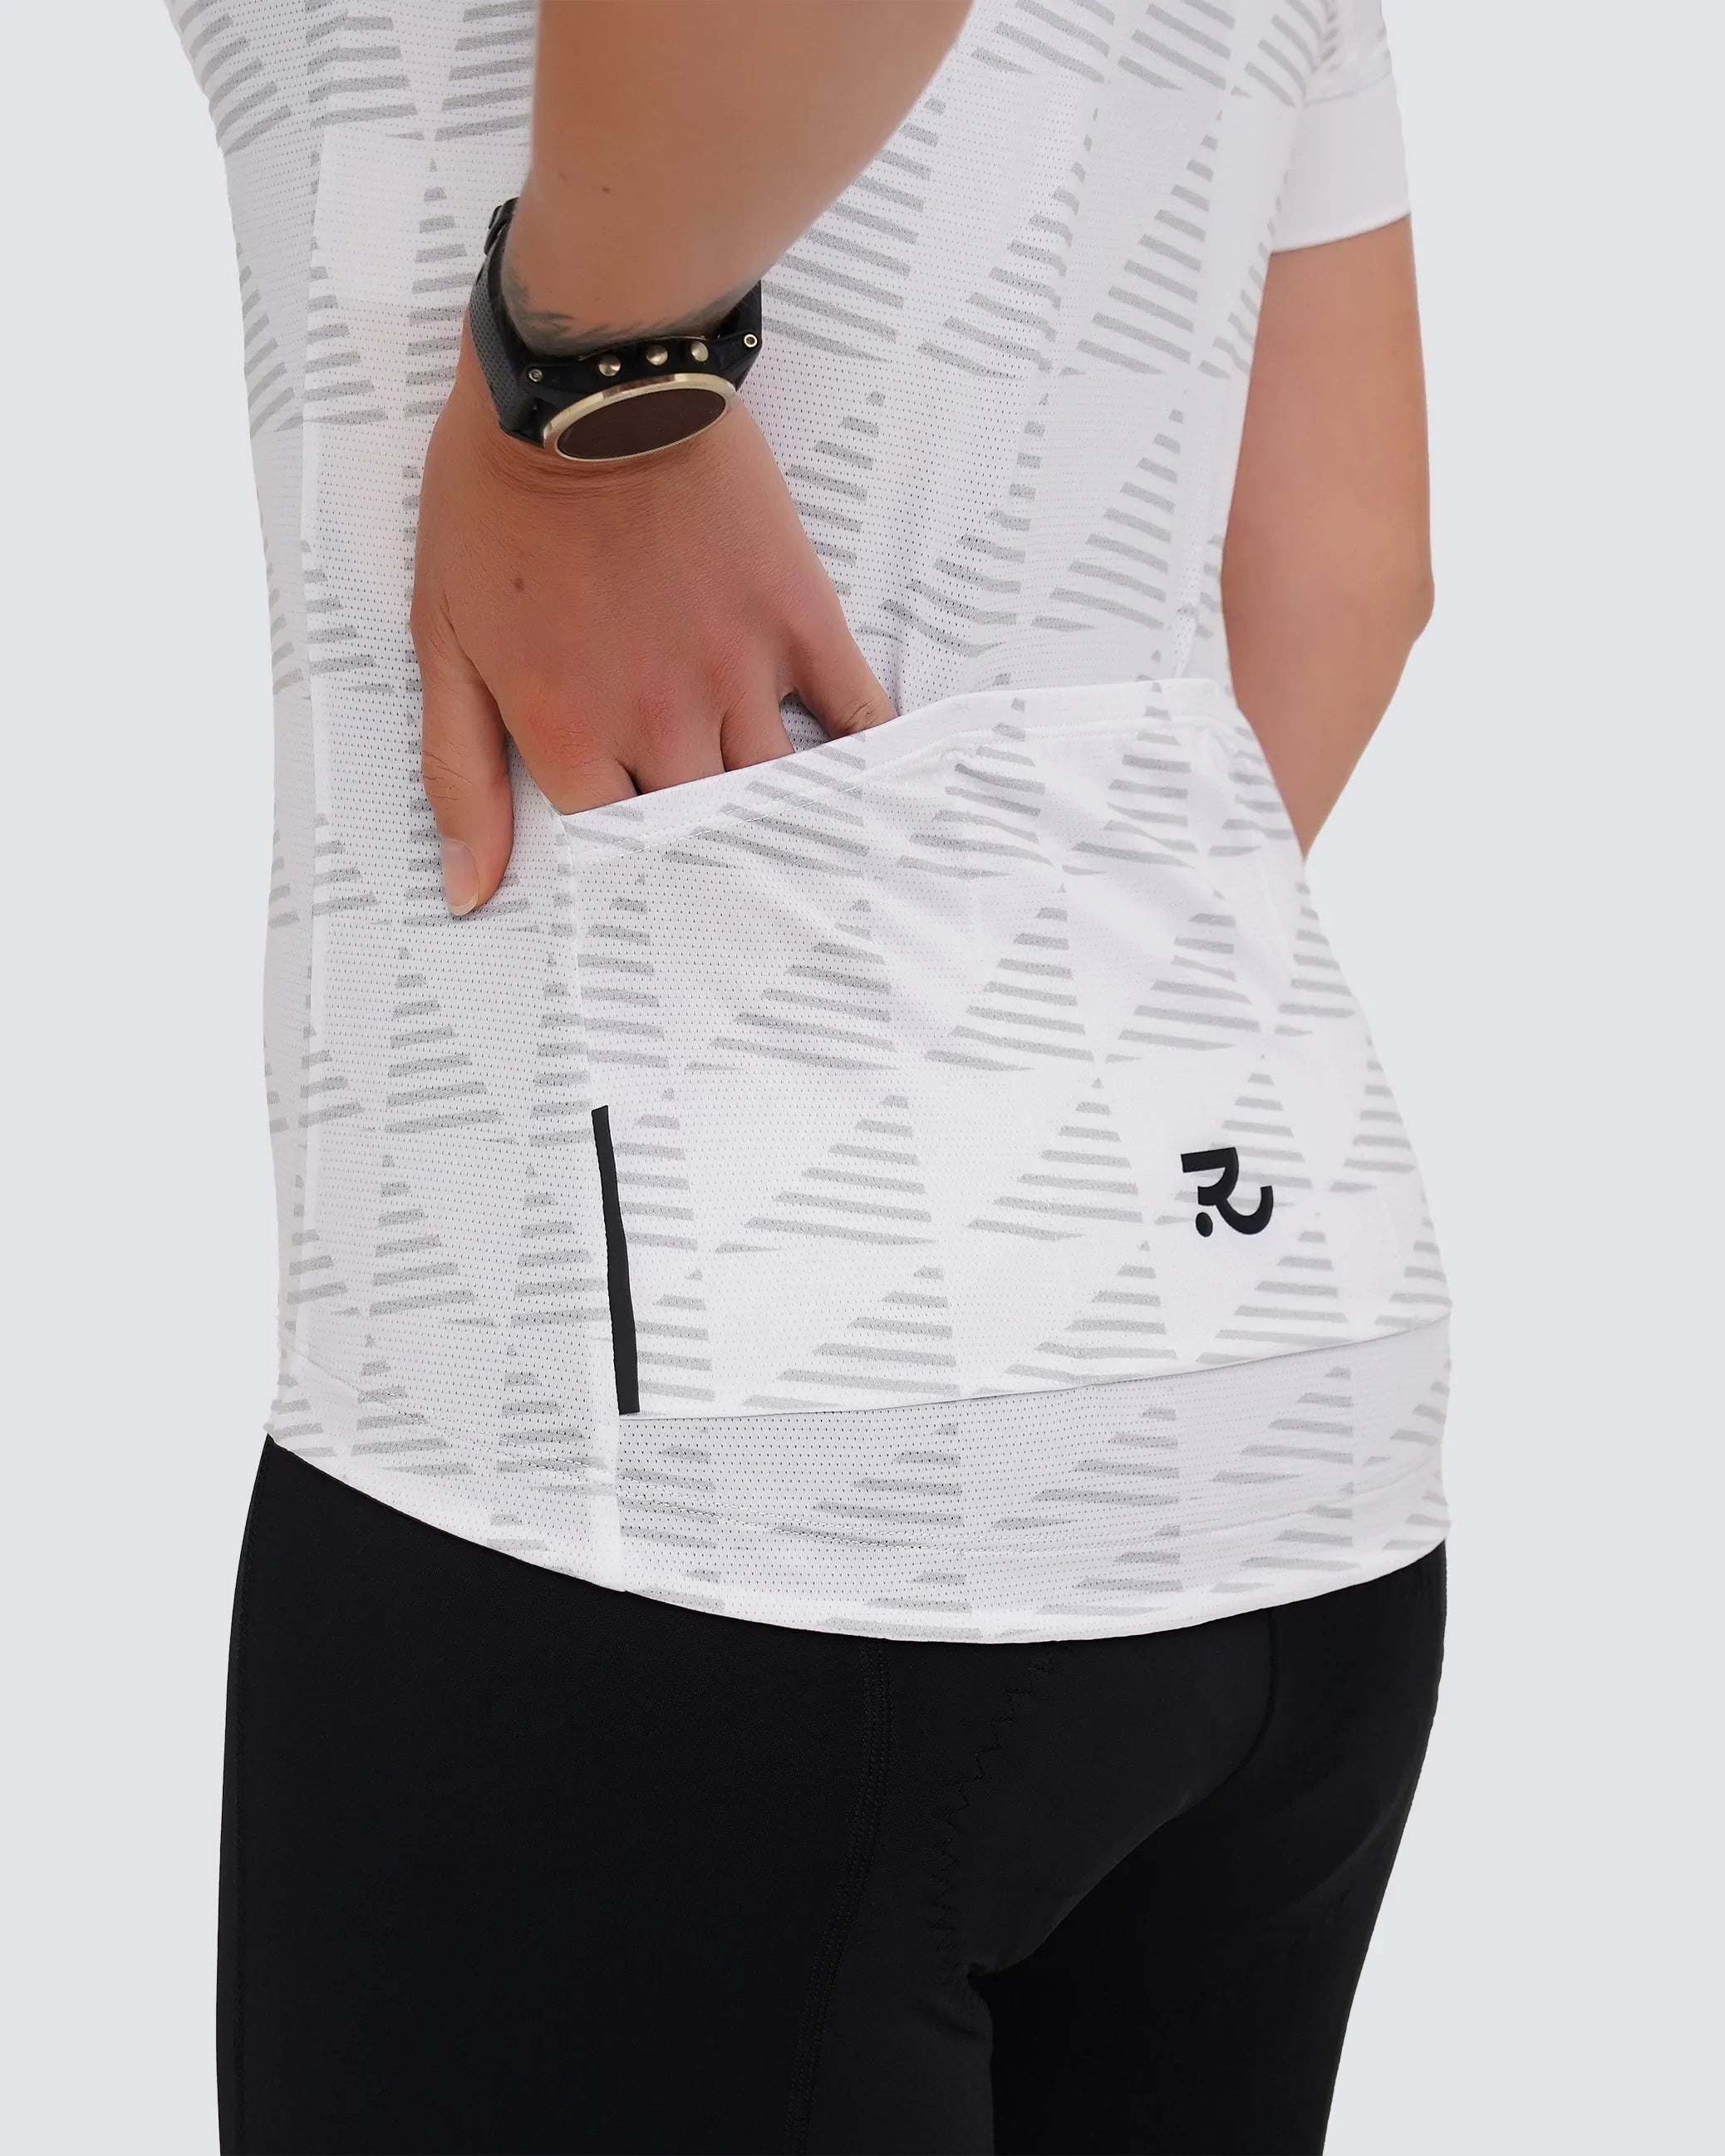 Camiseta personalizada Triathlon Buddies - Mujer